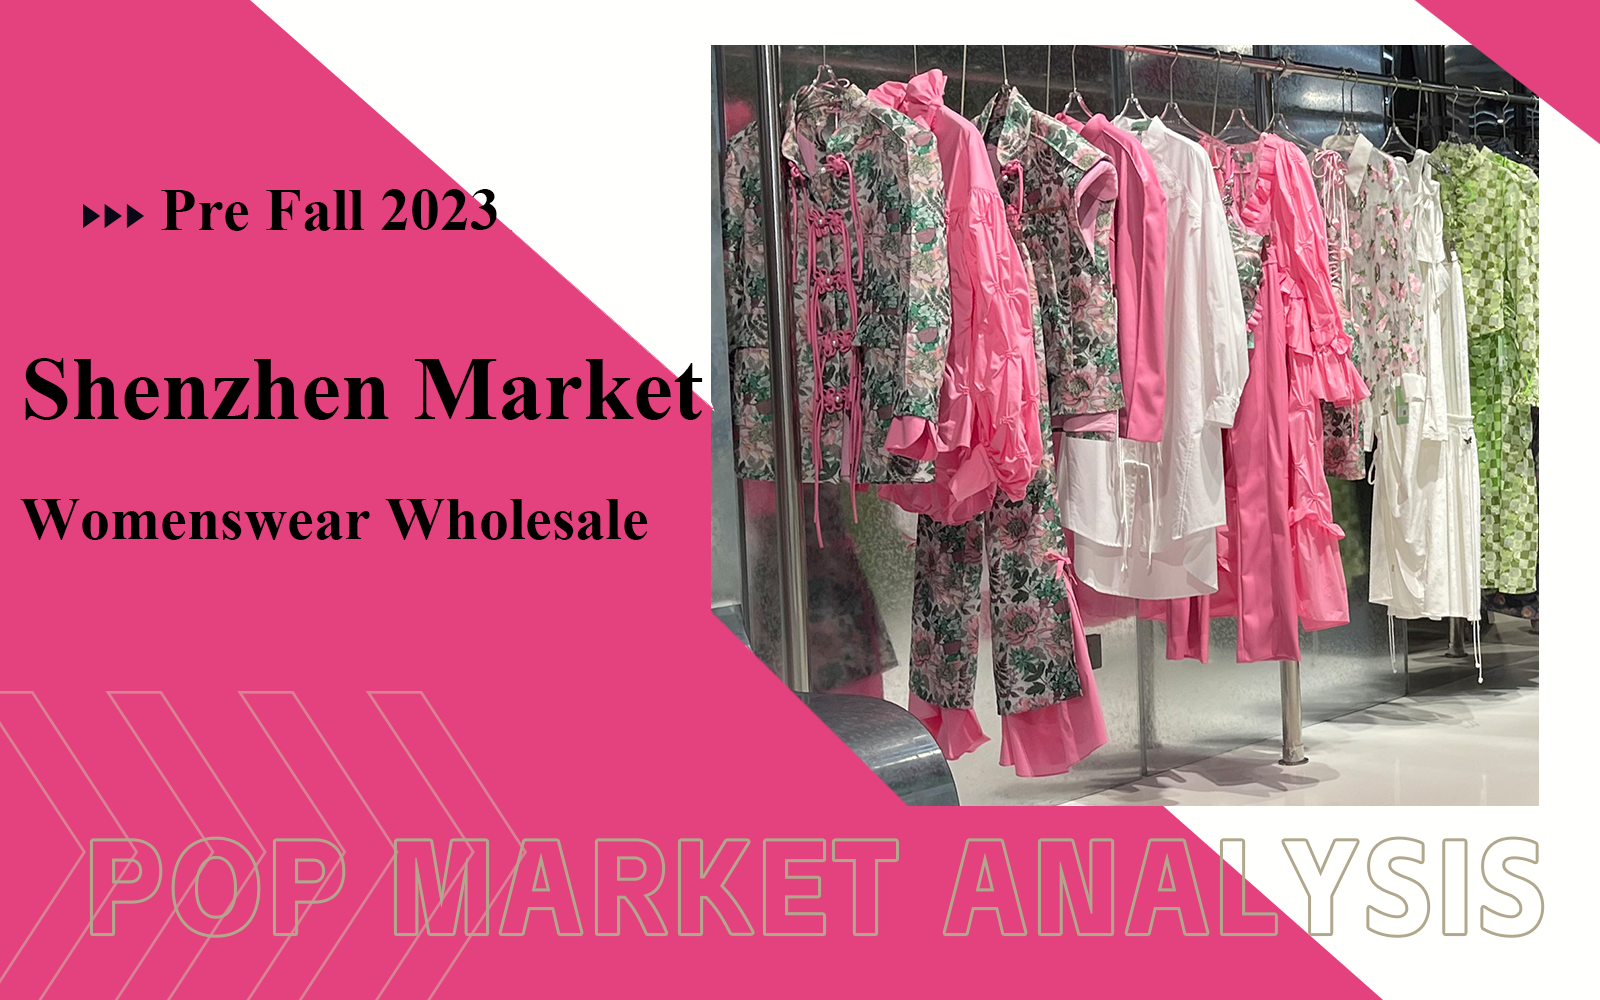 The Analysis of Shenzhen Womenswear Wholesale Market